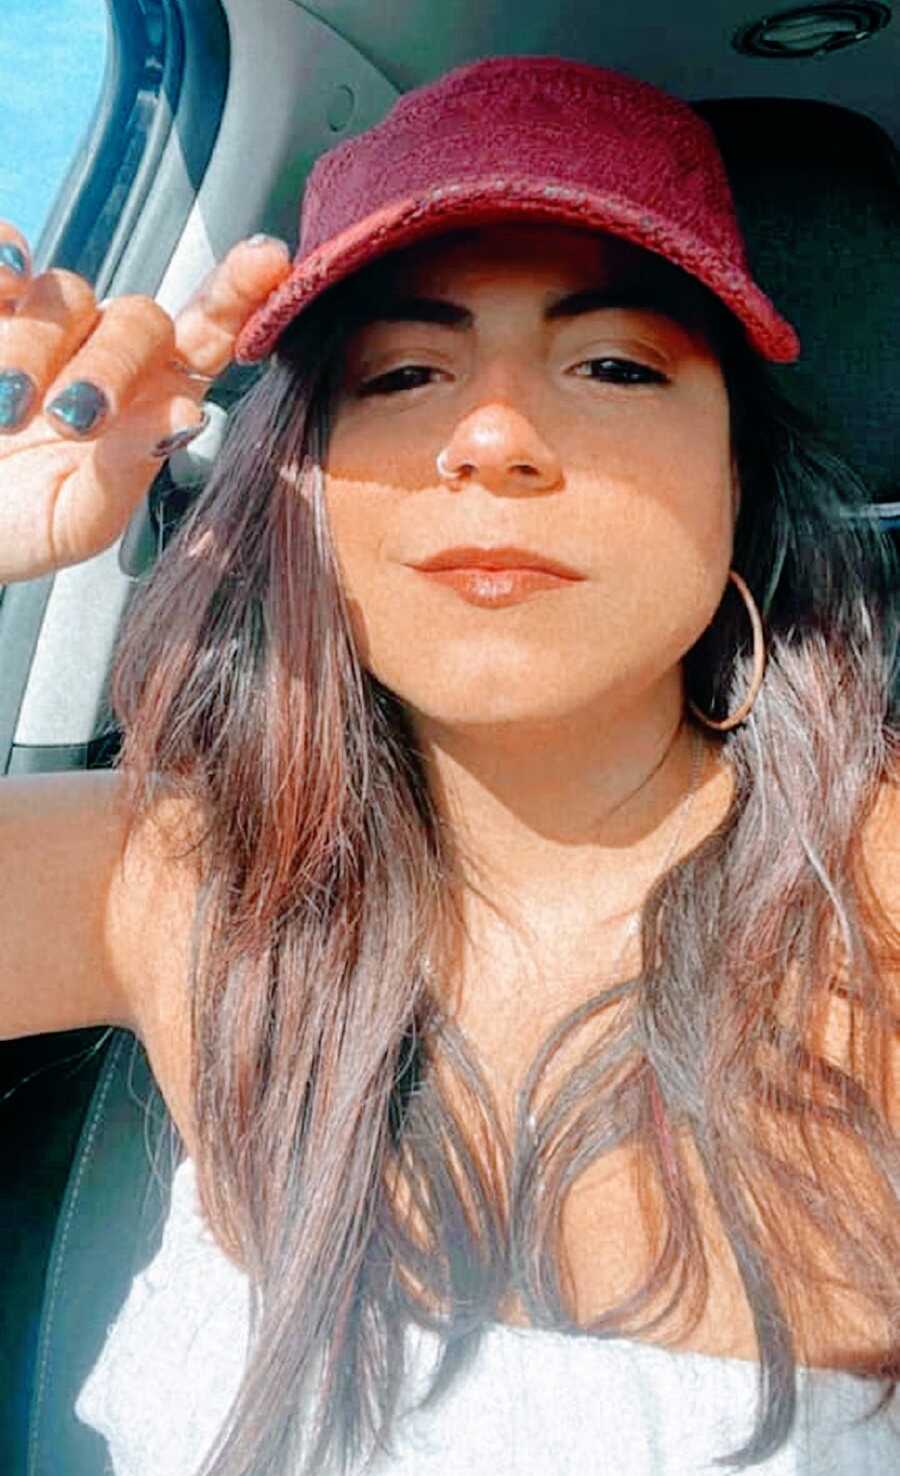 A suicide attempt survivor in a car wearing a hat